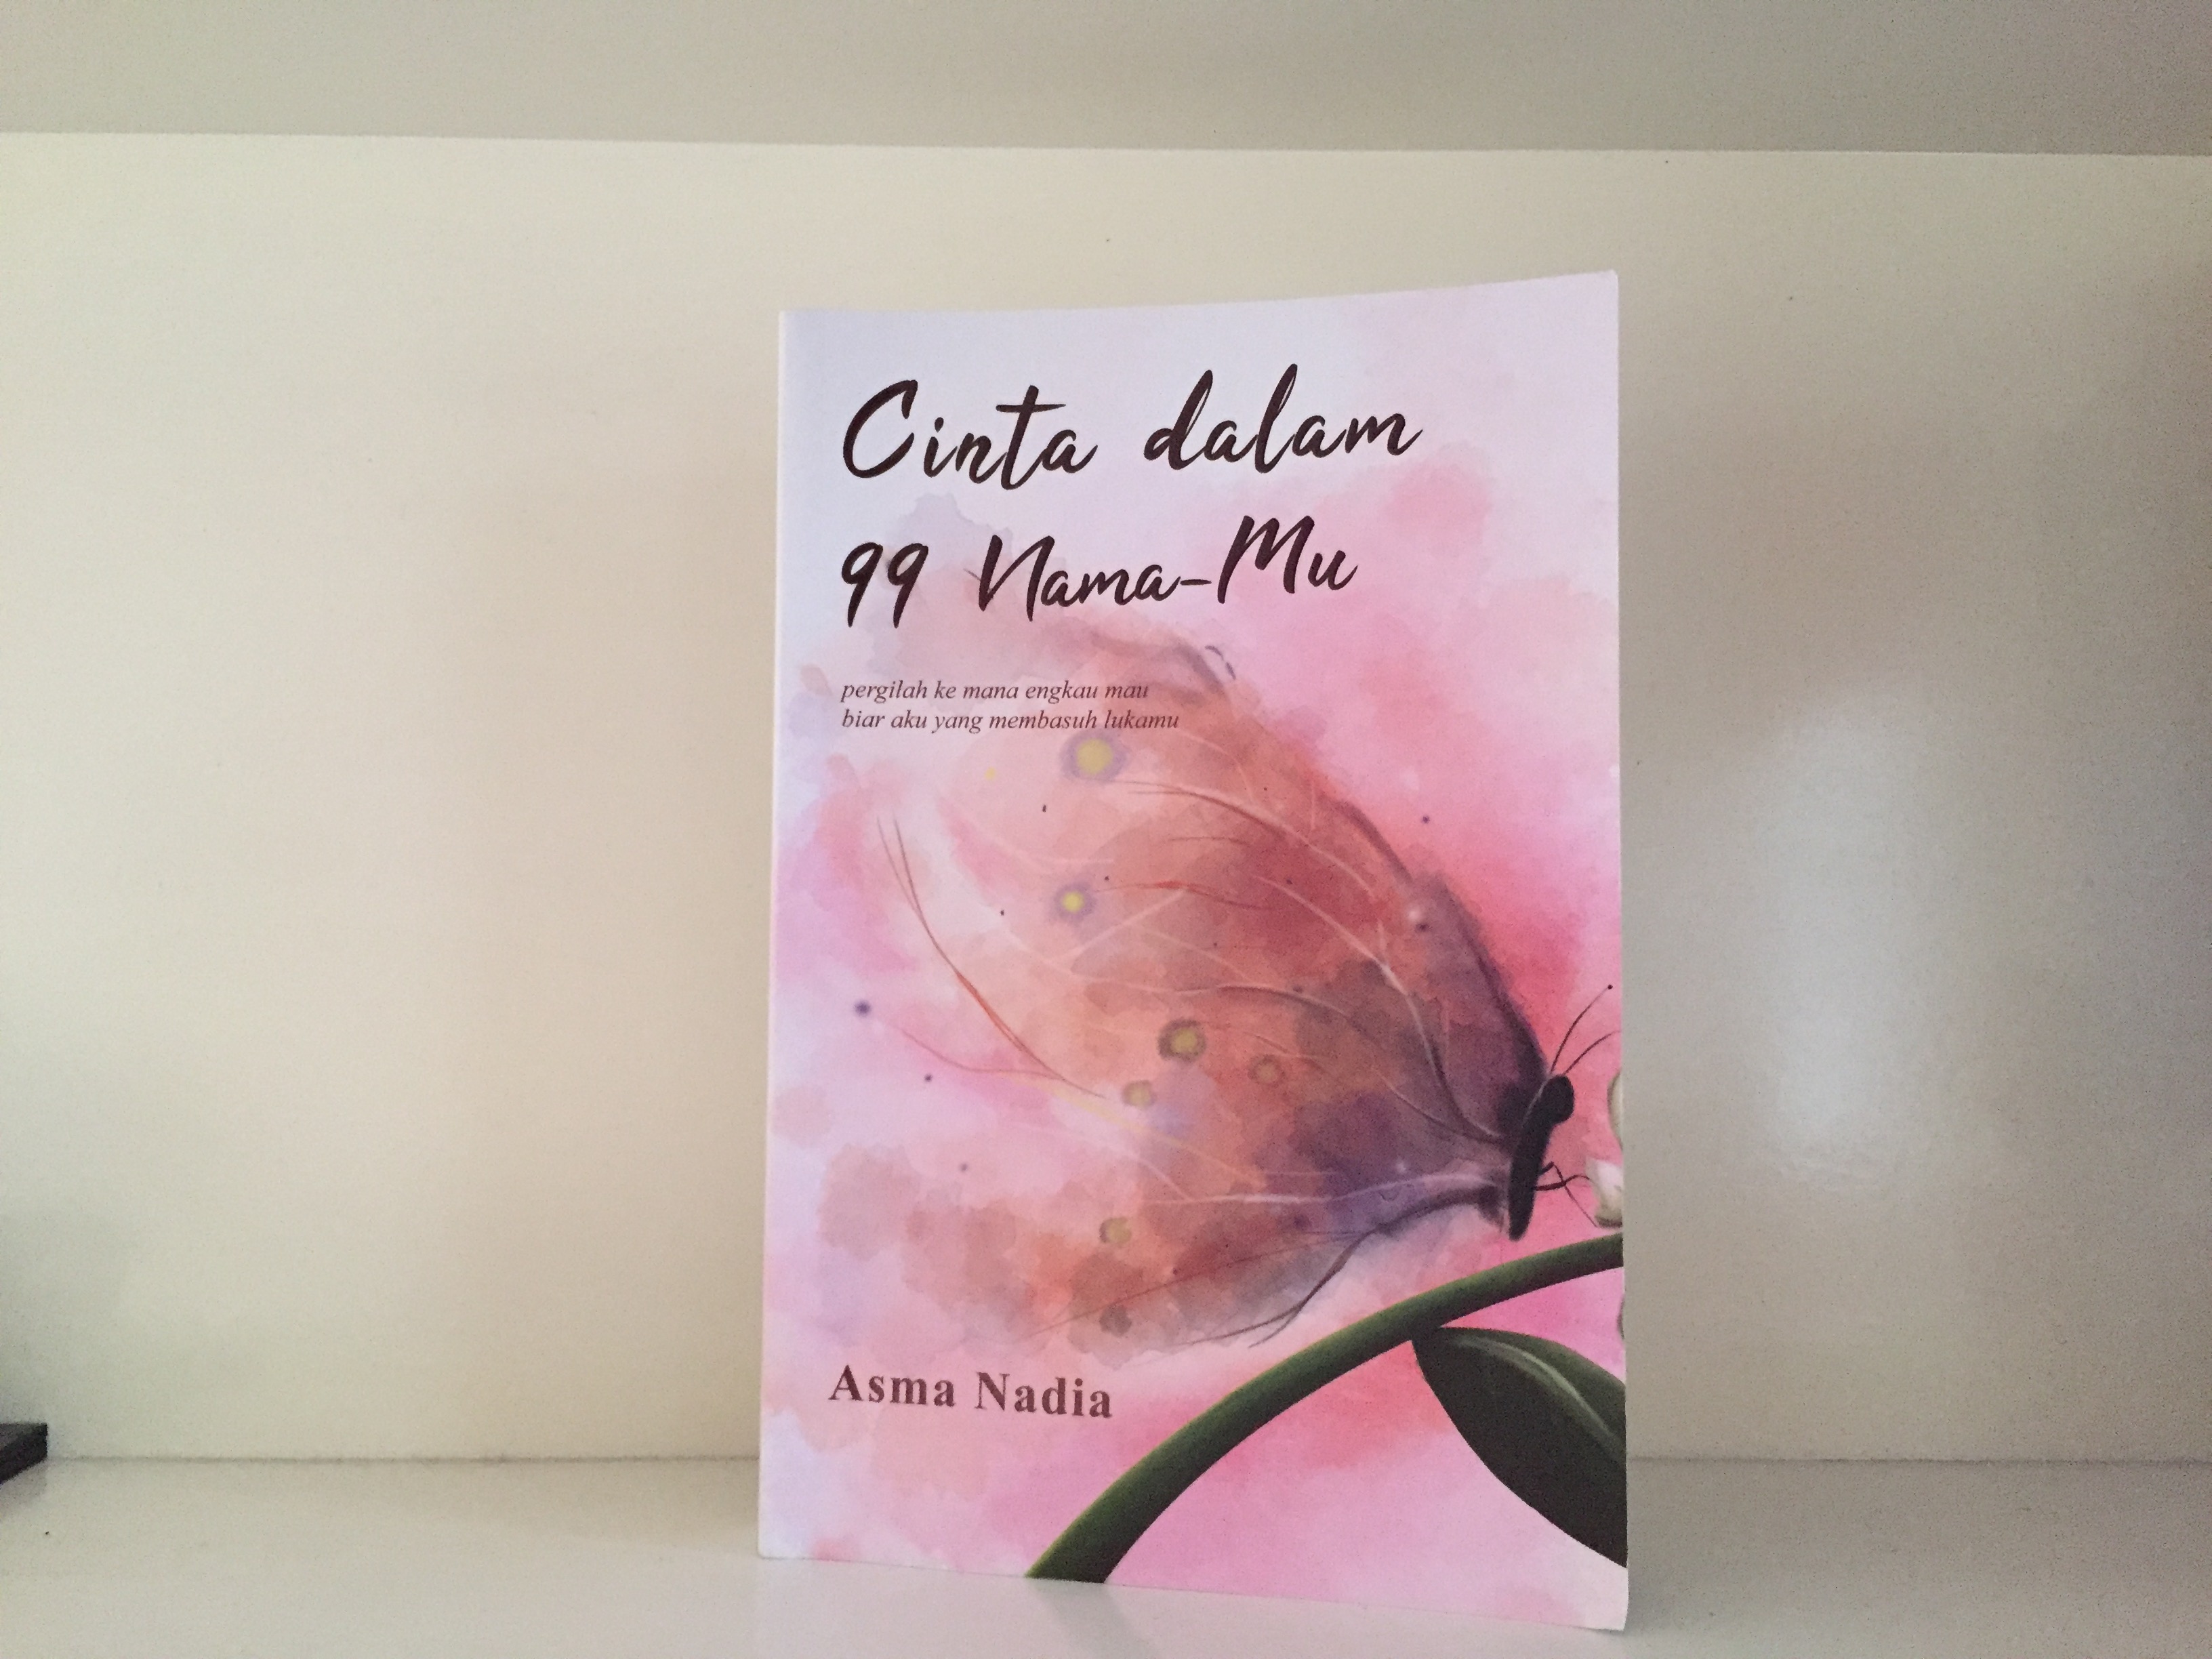 [Review Buku] : Cinta Dalam 99 Nama-Mu karya Asma Nadia 